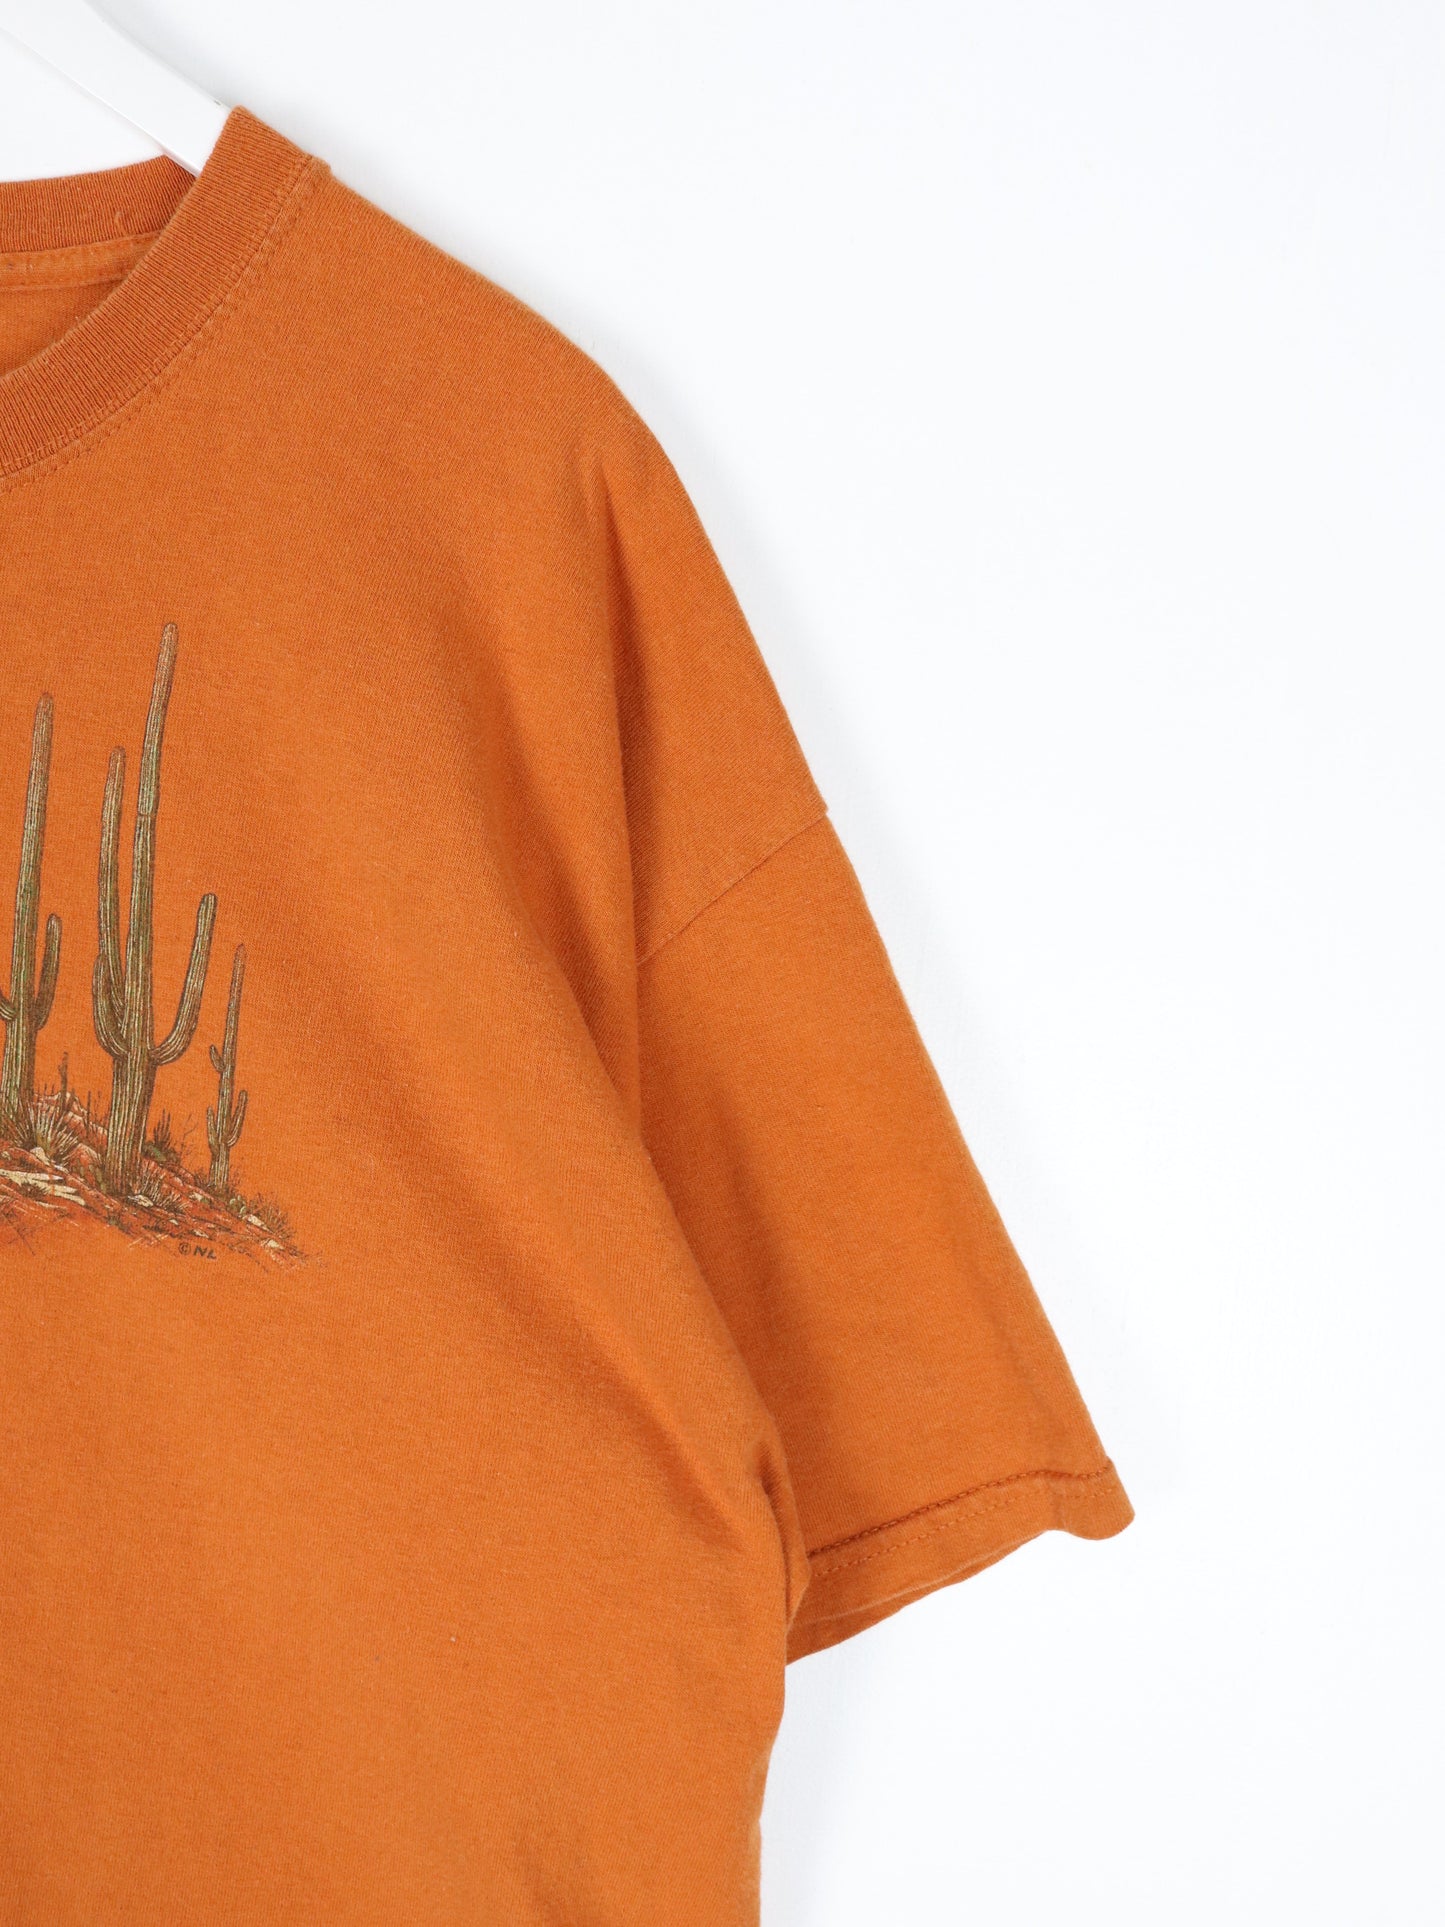 Vintage Tucson Arizona T Shirt Mens XL Orange USA